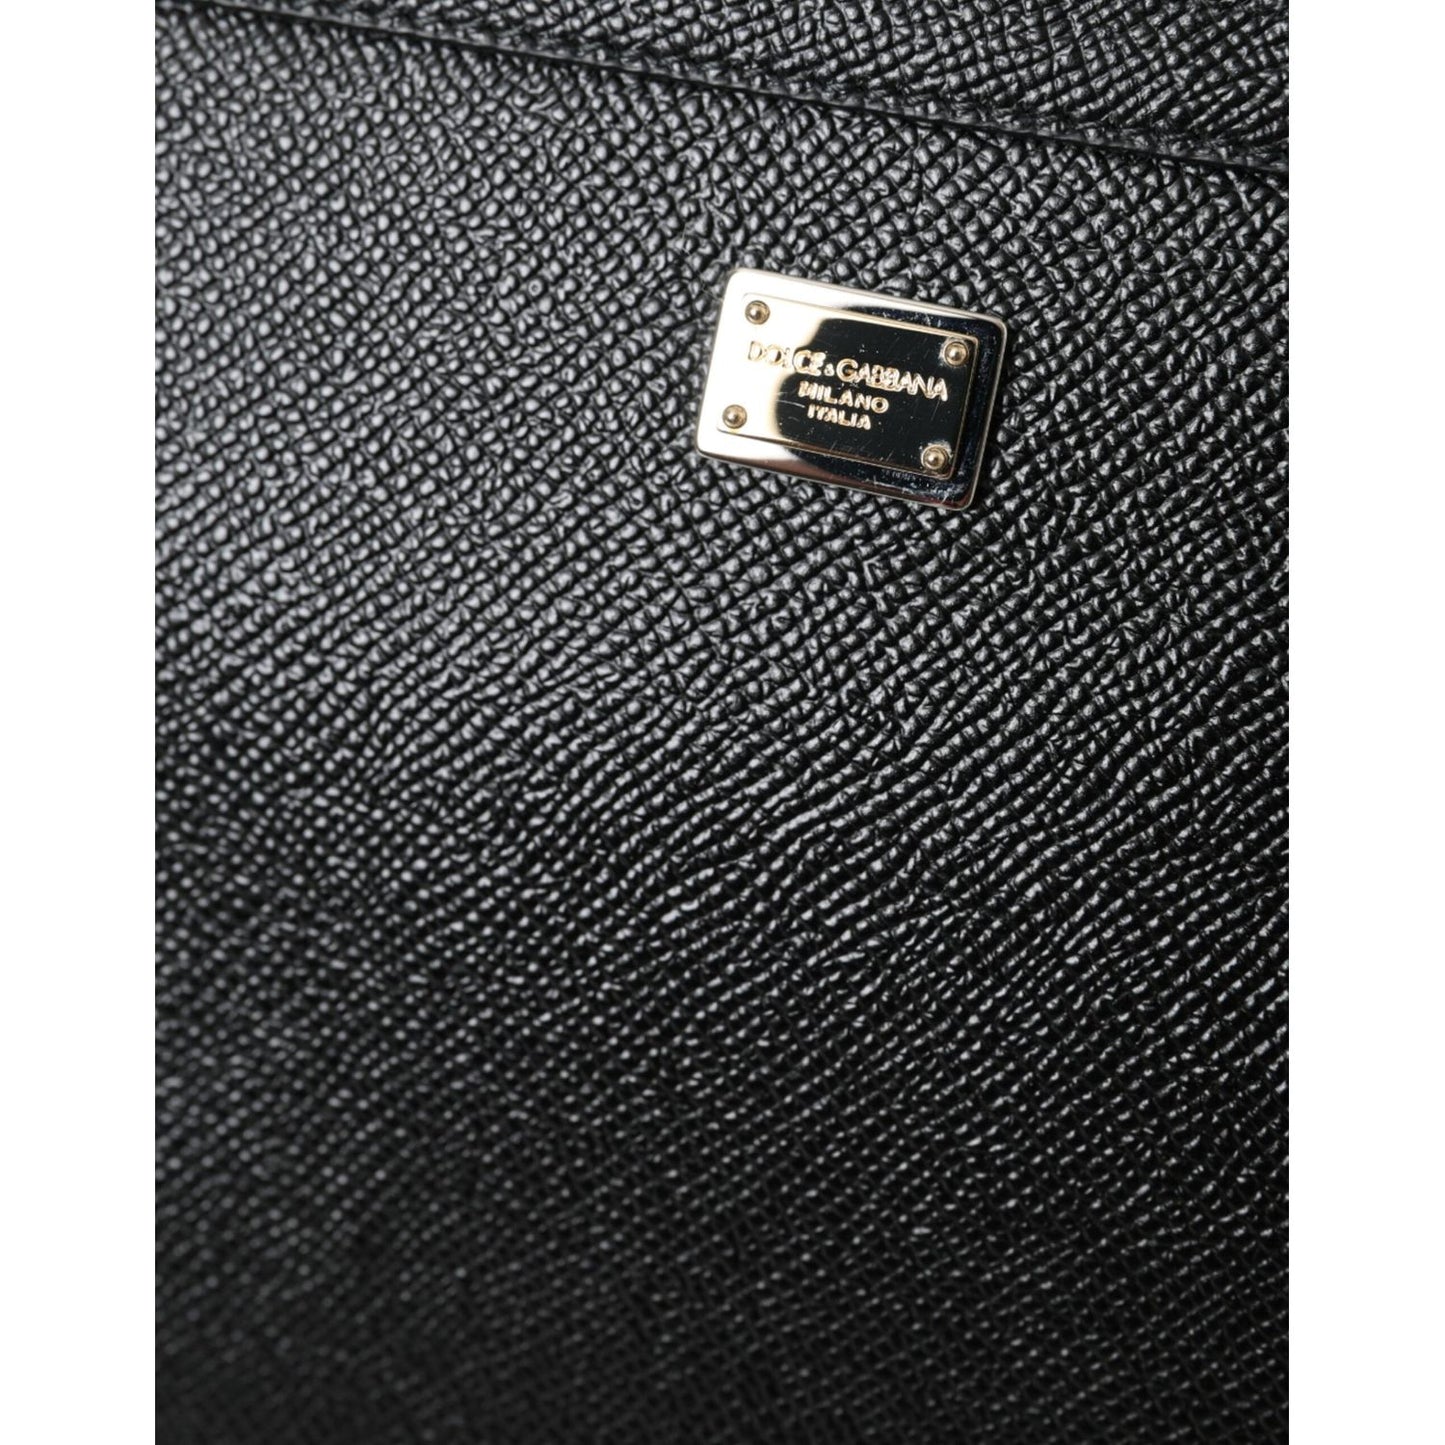 Black Leather #DGFamily Patch Top Handle Bag